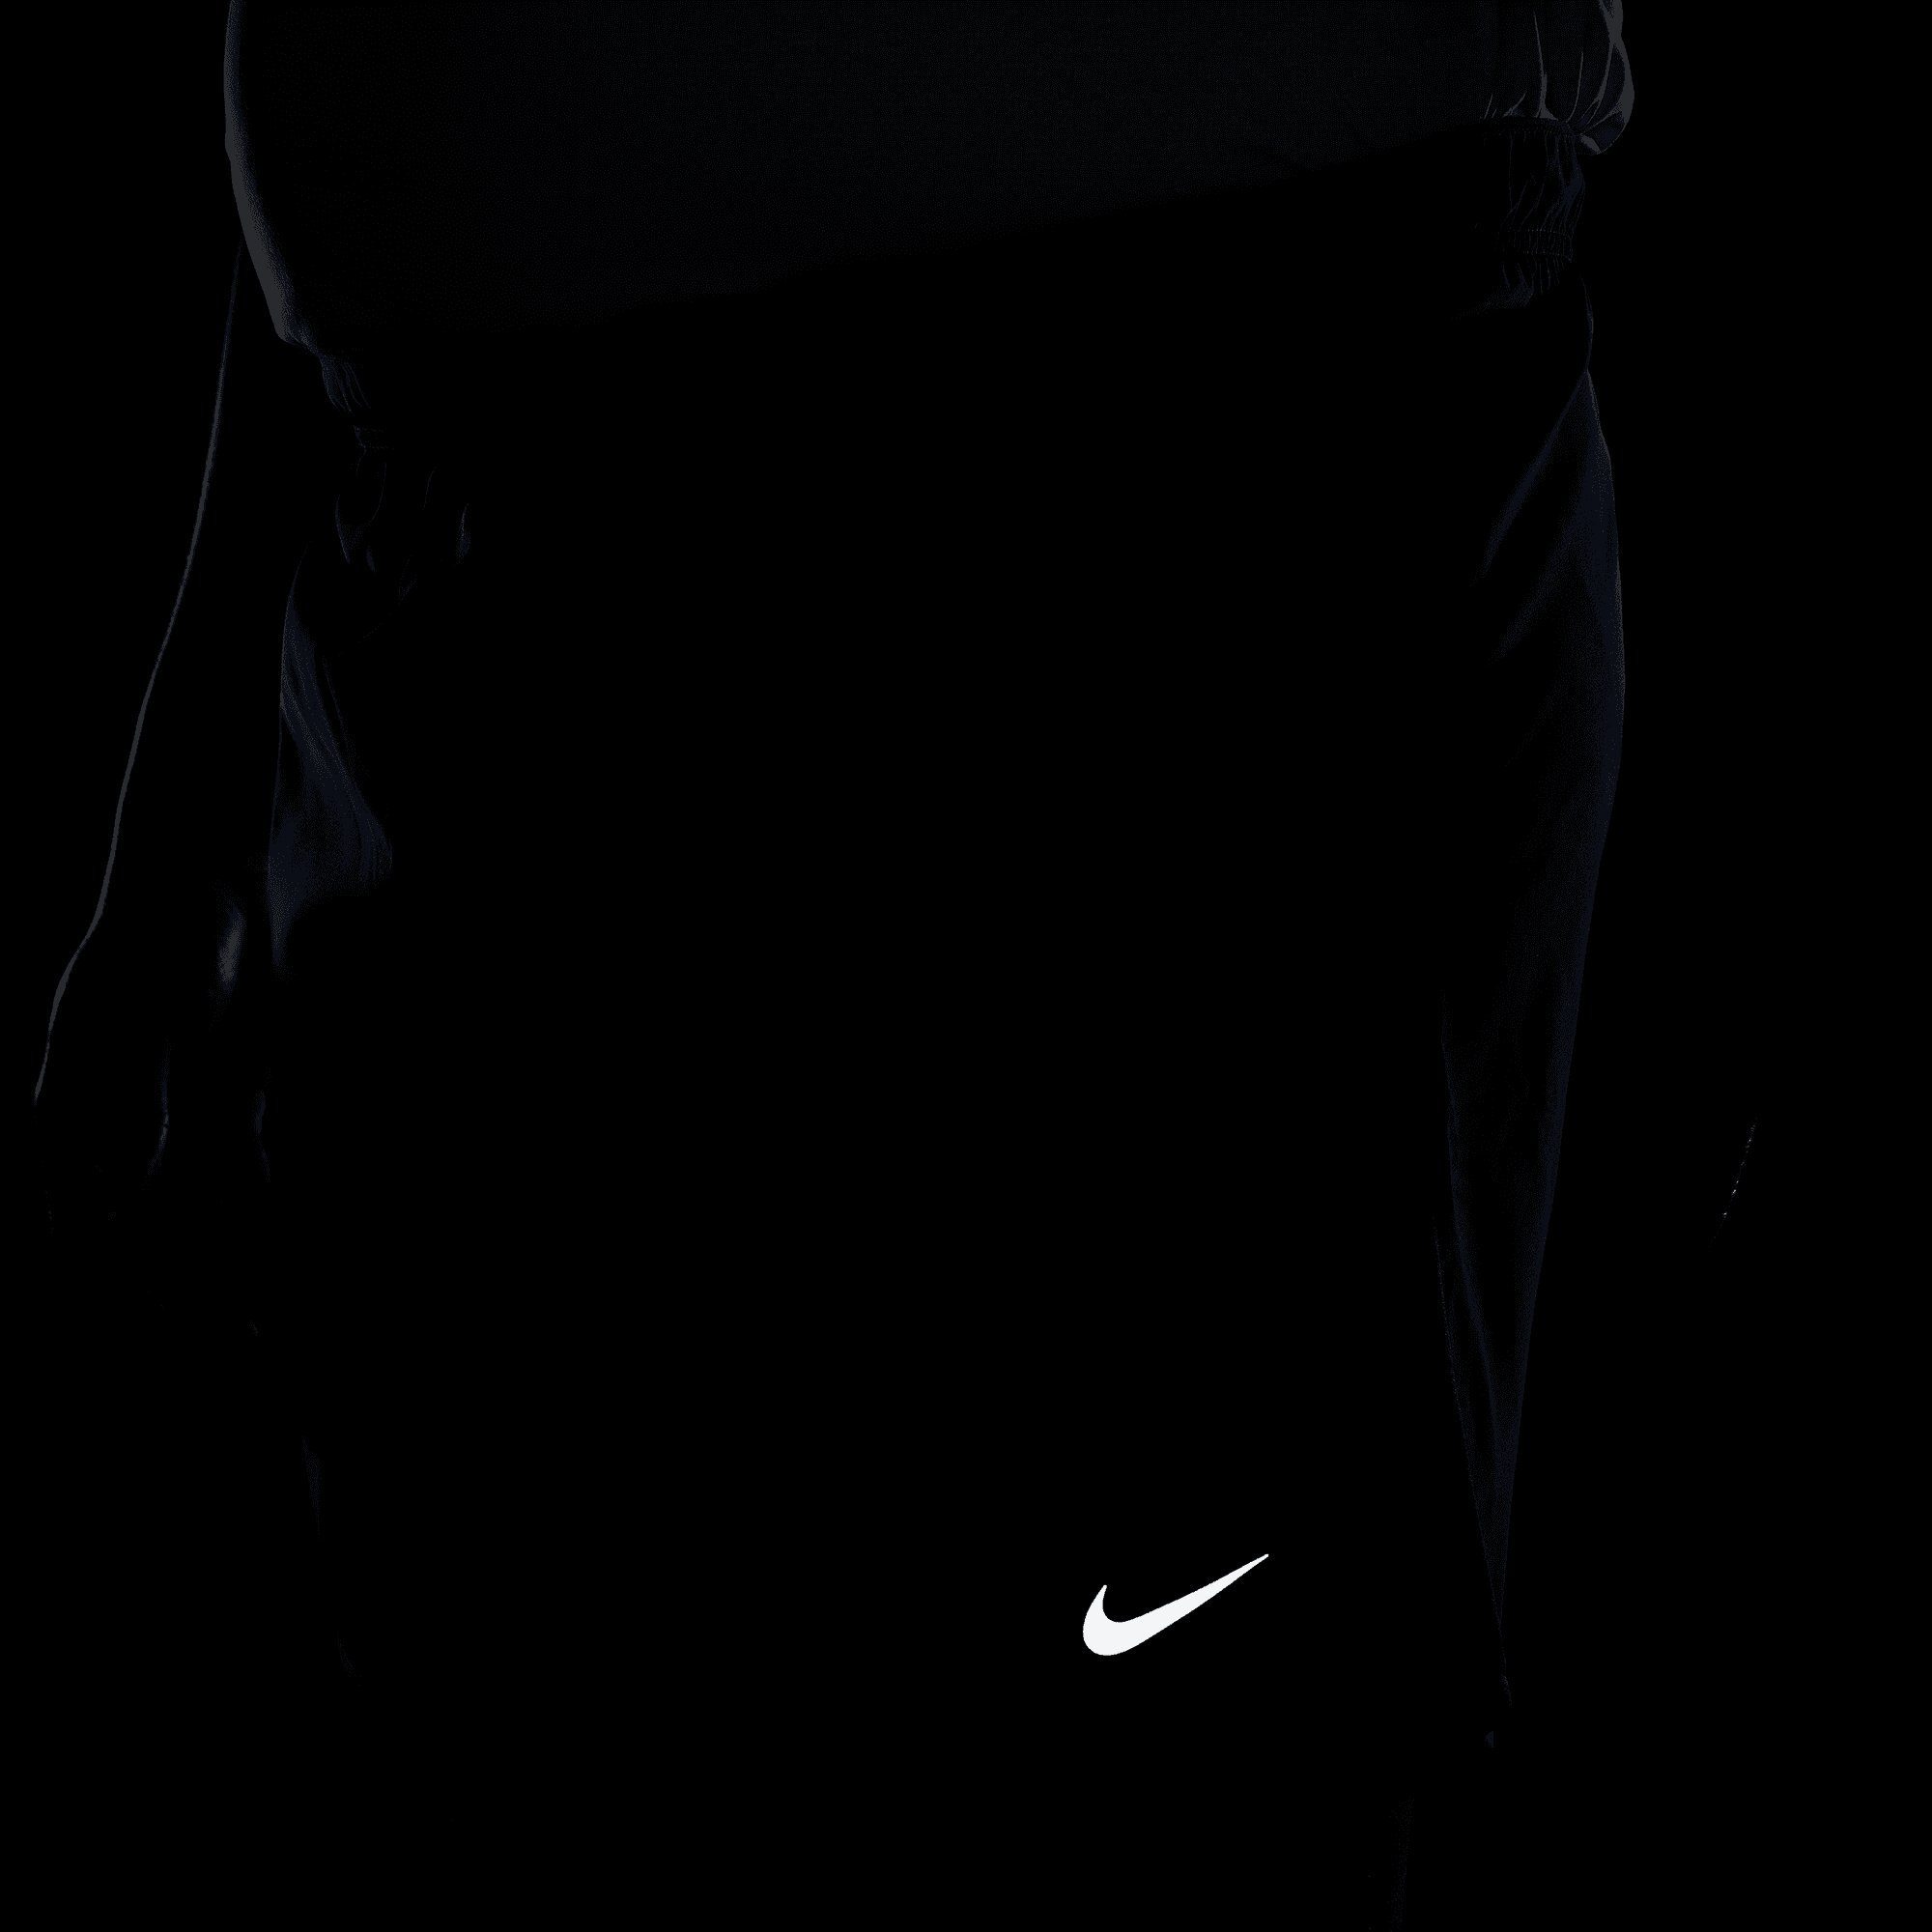 " Nike VERSATILE OBSIDIAN/OBSIDIAN/BLACK/REFLECTIVE MEN'S CHALLENGER SHORTS BRIEF-LINED DRI-FIT Laufshorts SILV